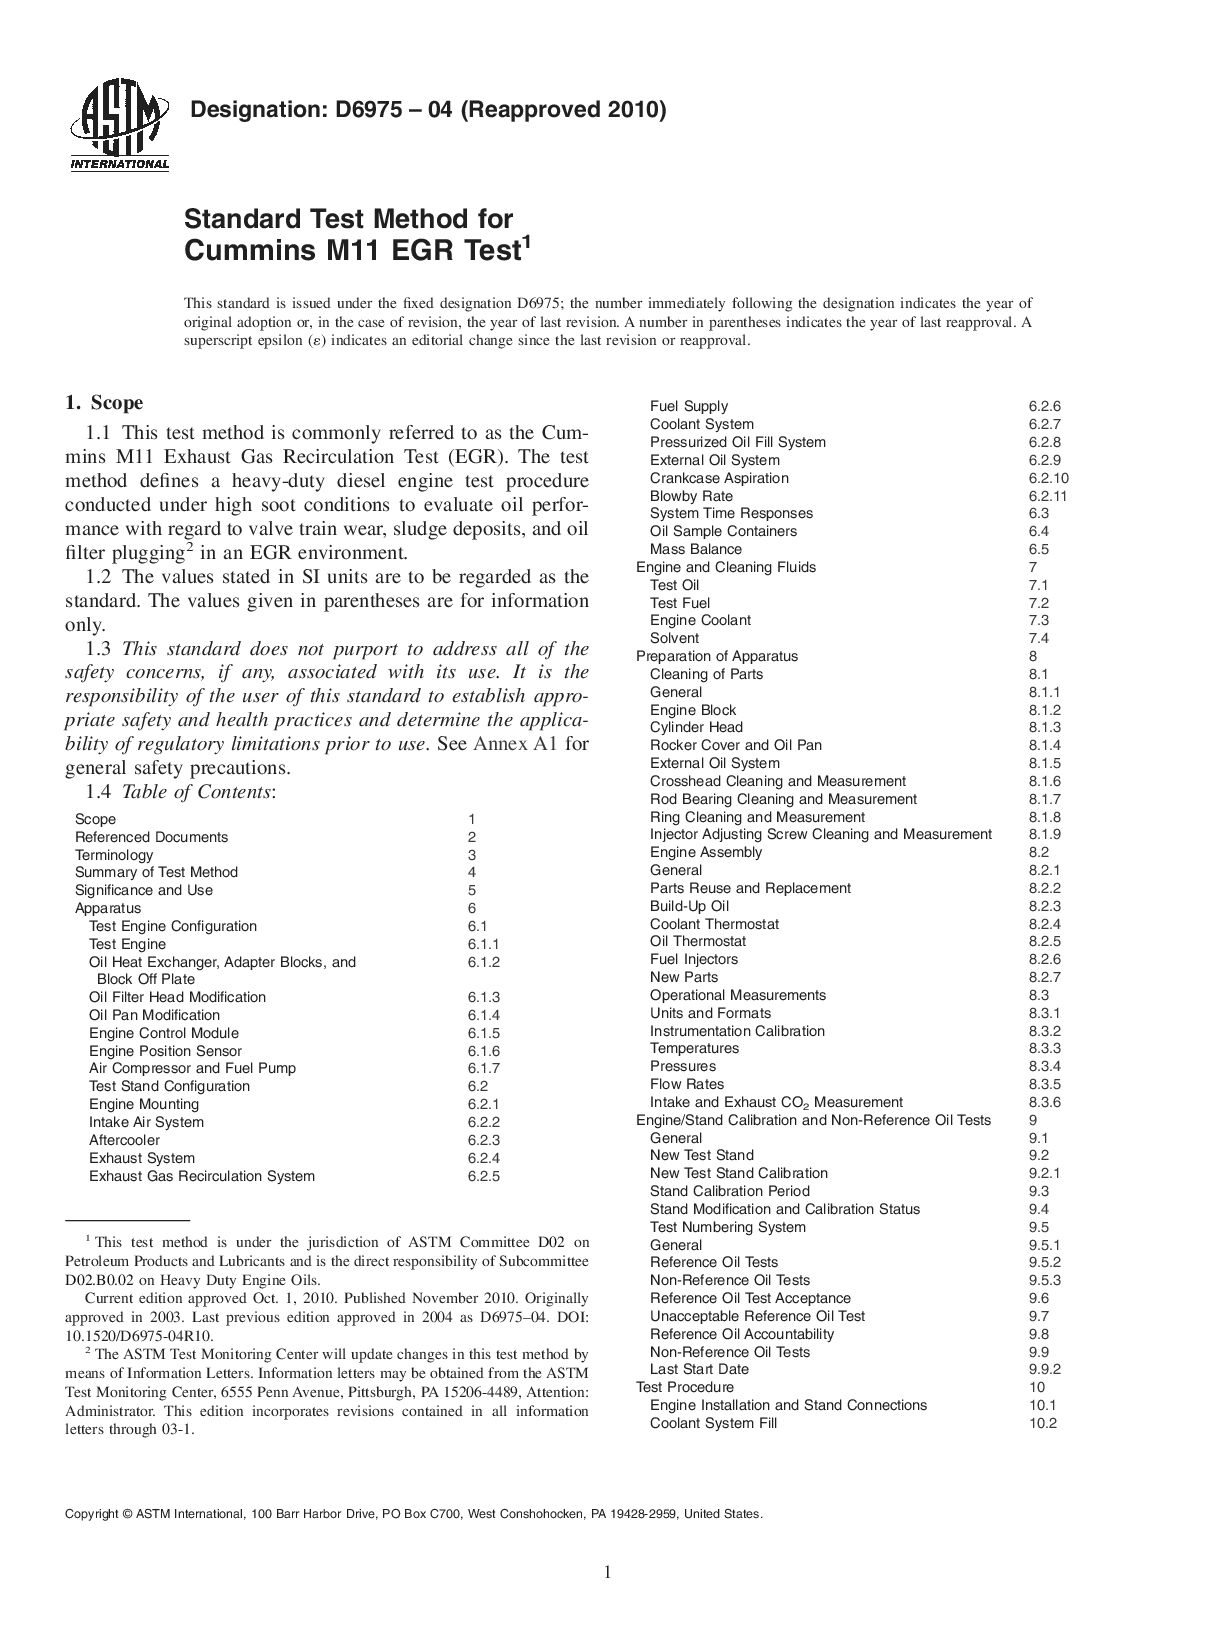 ASTM D6975-04(2010)封面图